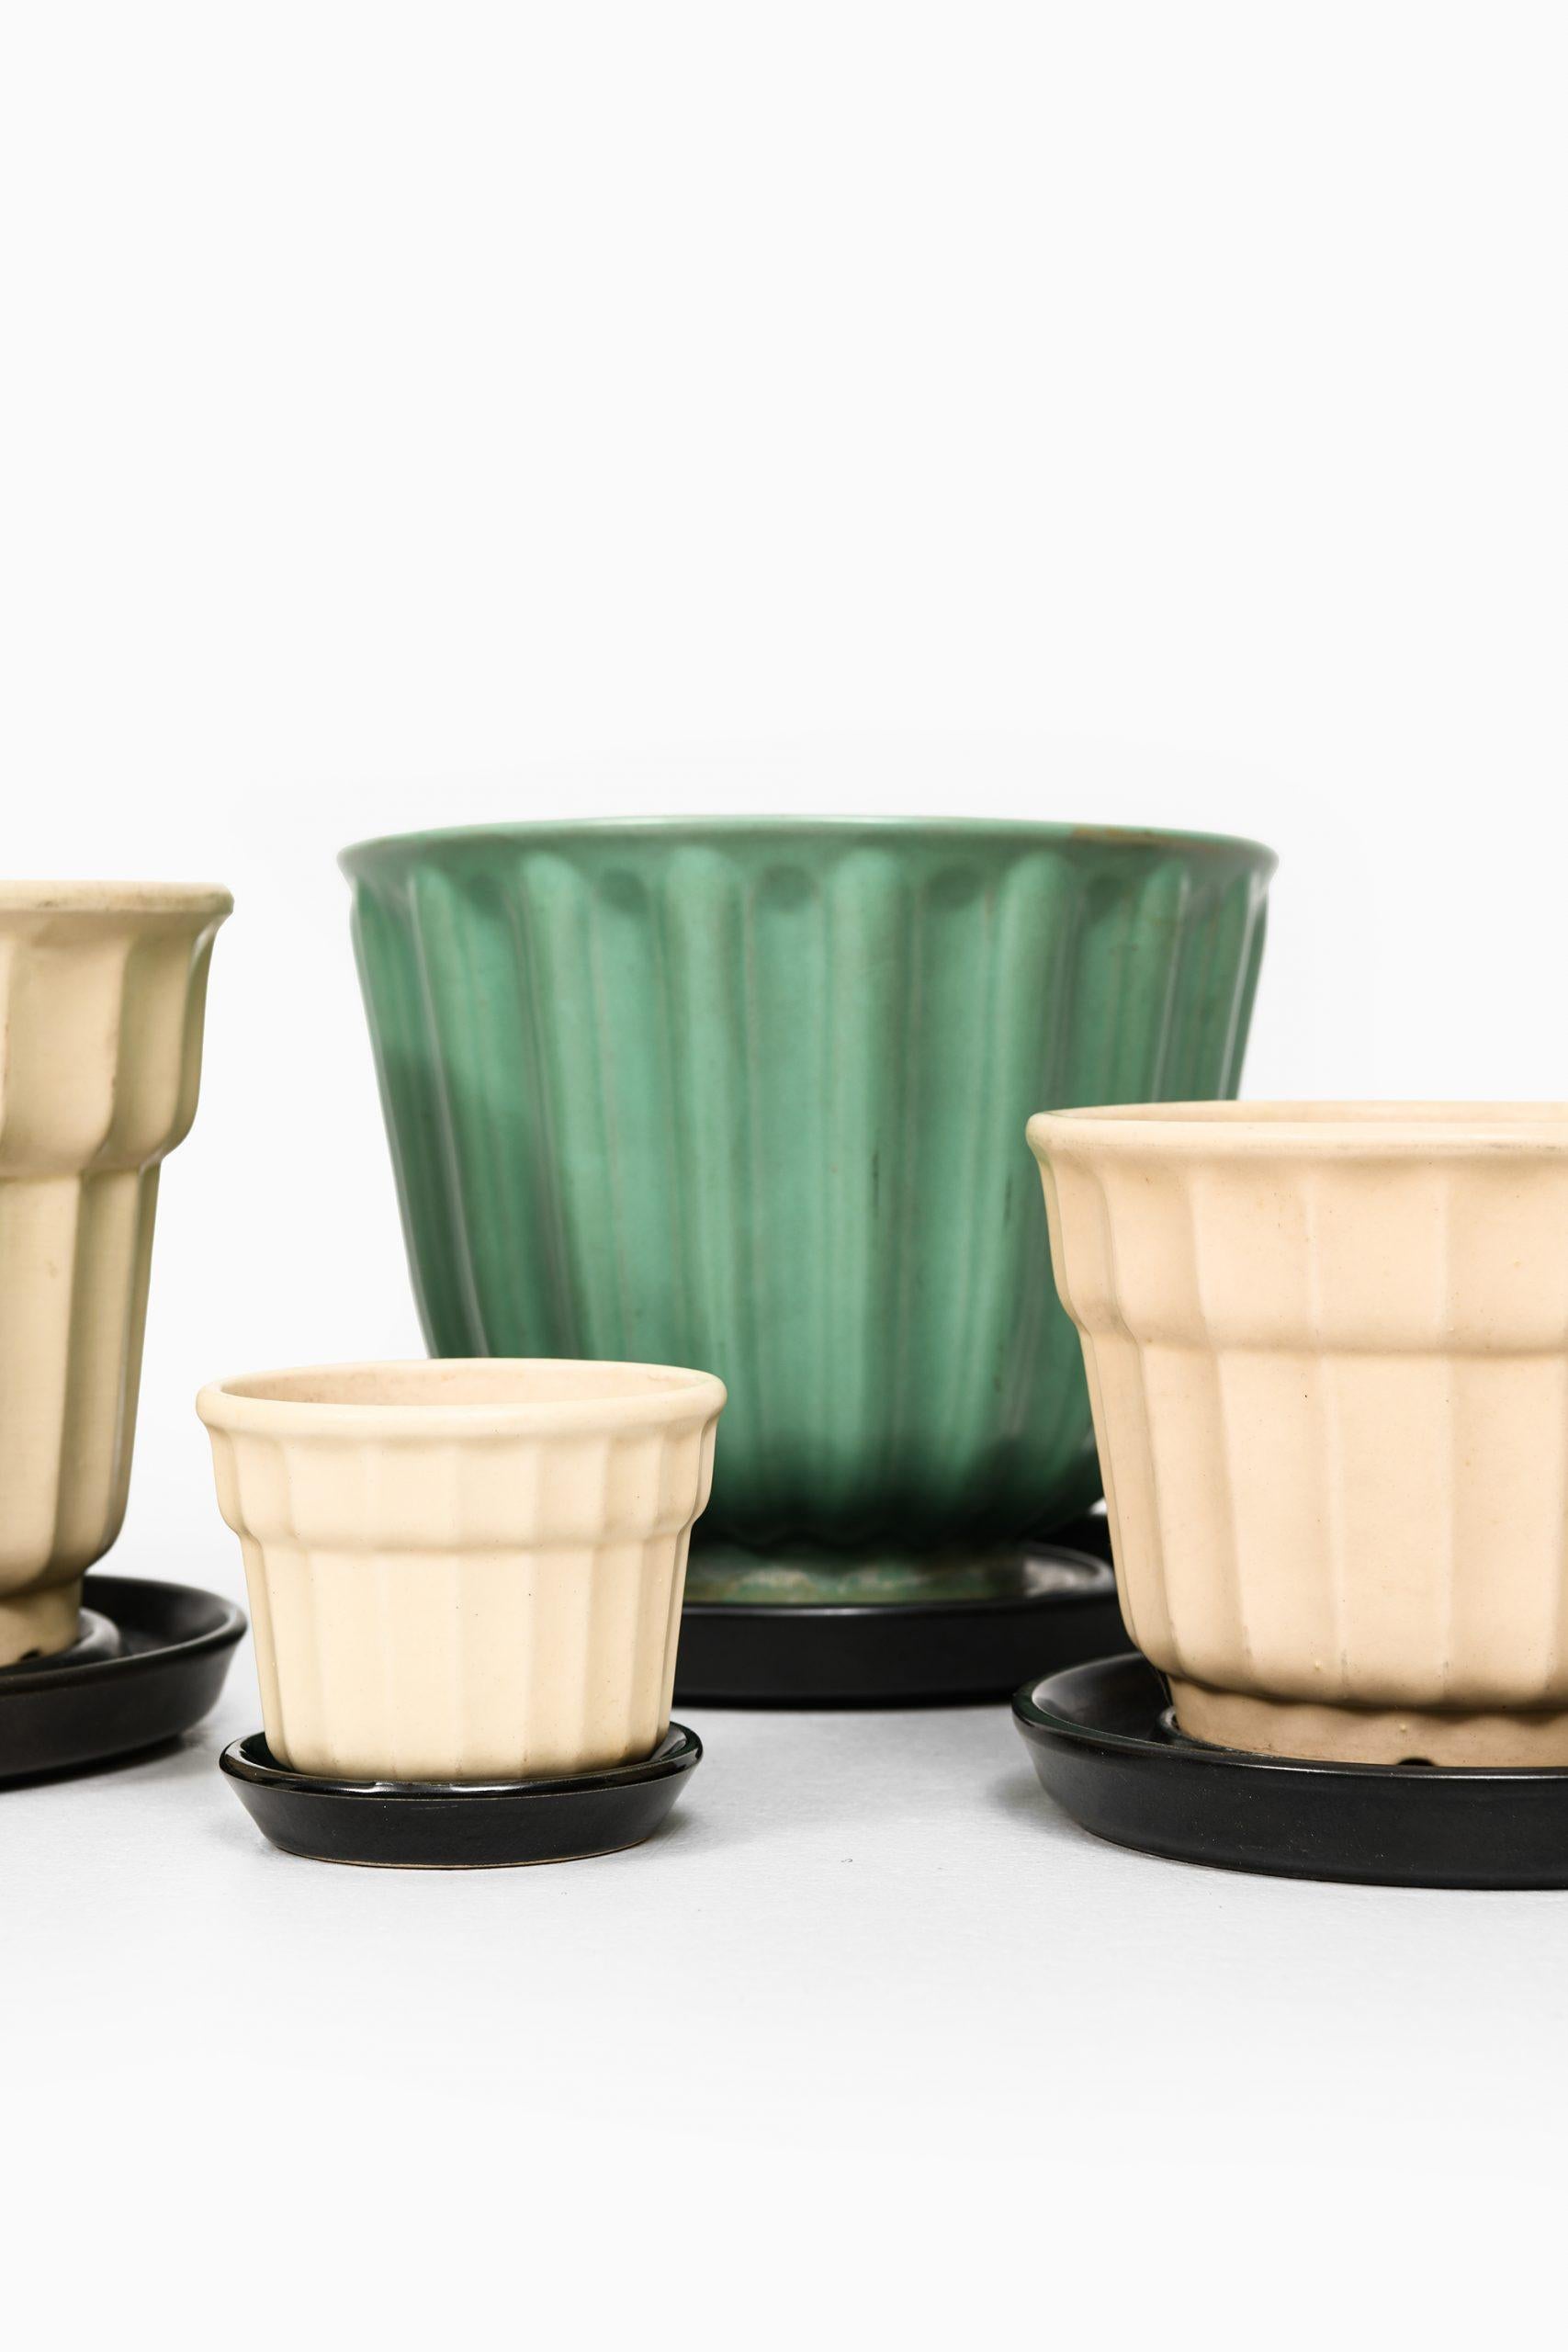 Glazed ceramic vases / flower pots model Tellus designed by Ewald Dahlskog. Produced by Bobergs Fajansfabrik in Sweden.
Dimensions largest (W x D x H): 22 x 22 x 19 cm.
Dimensions smallest (W x D x H): 9.5 x 9.5 x 8.5 cm.
  